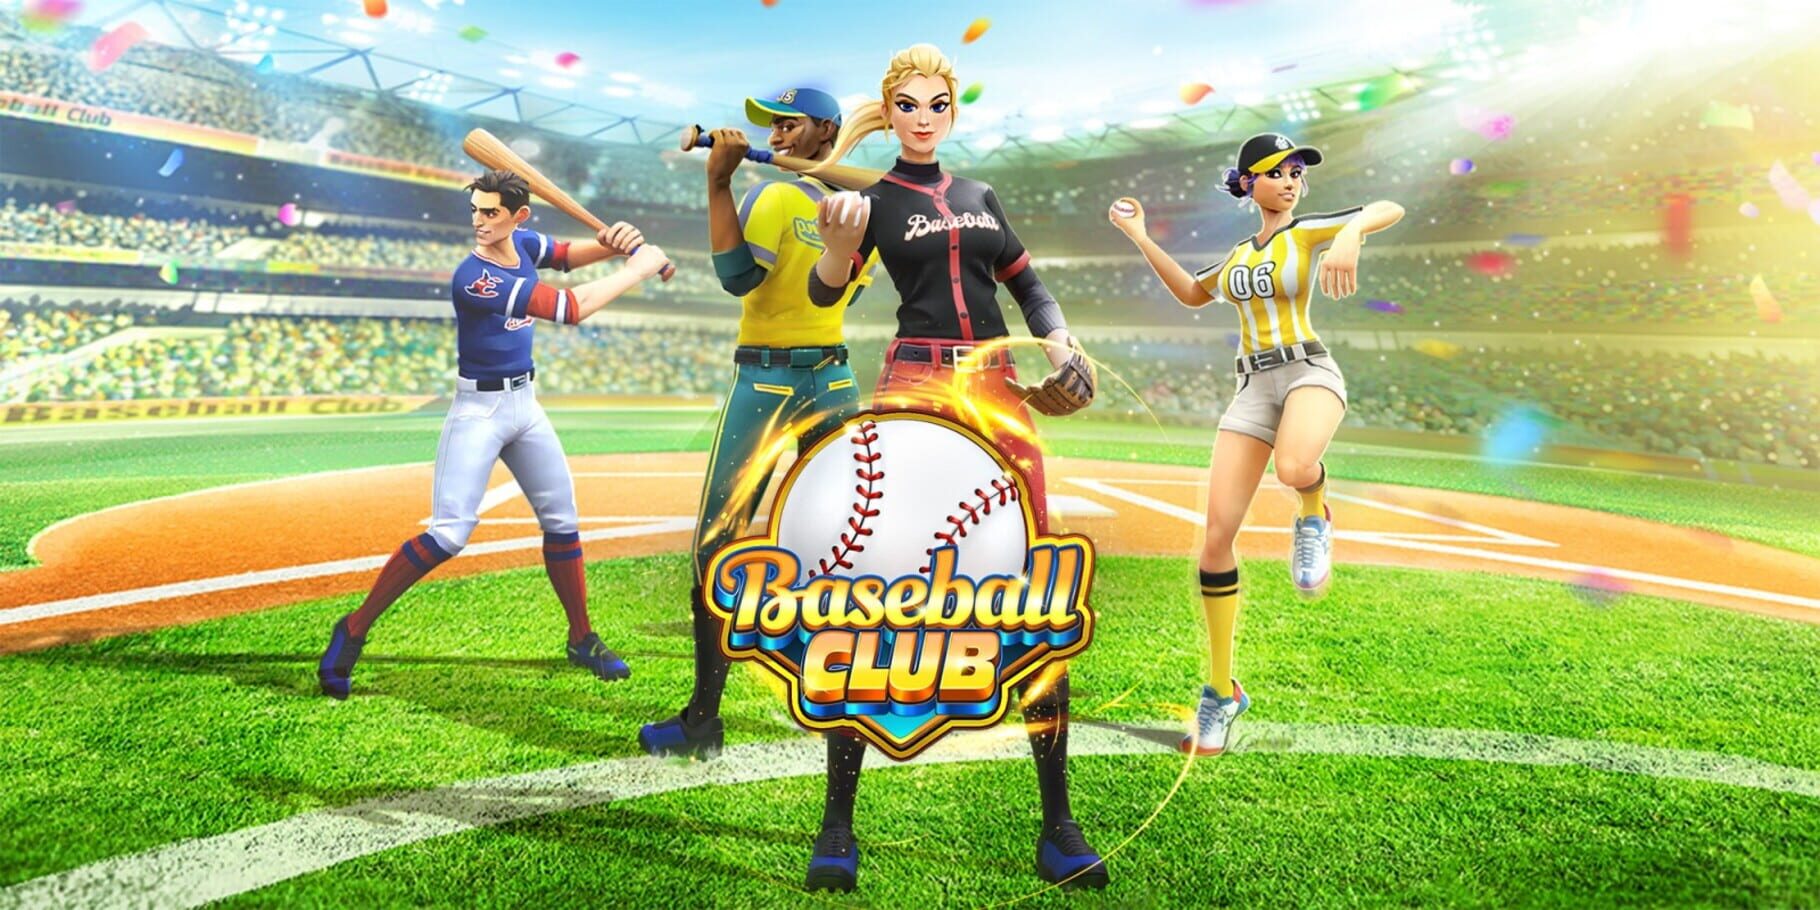 Baseball Club artwork